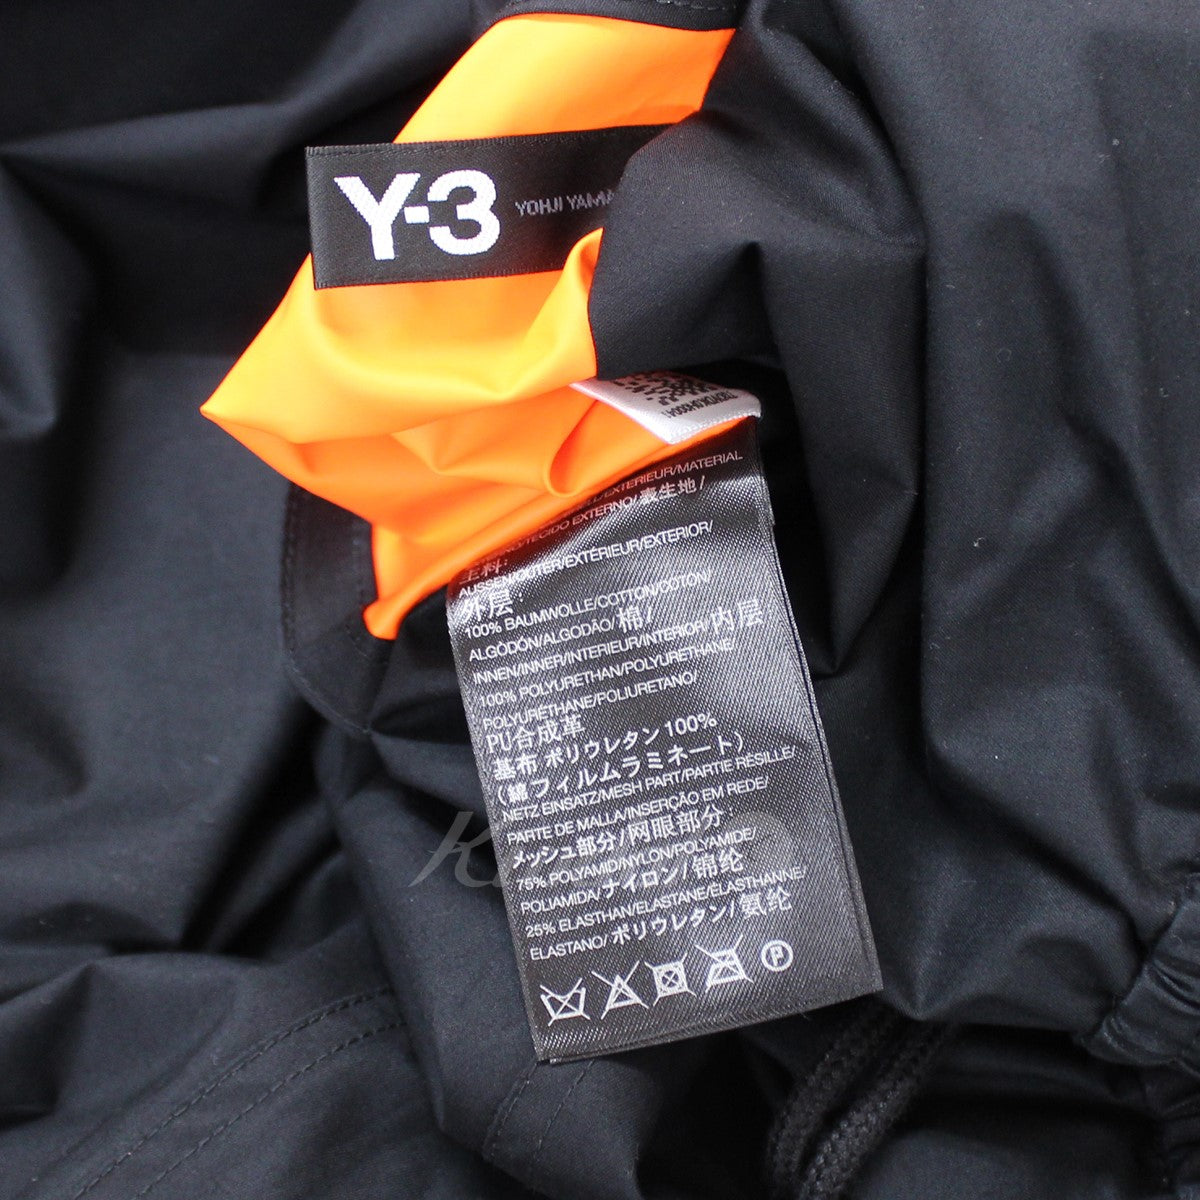 Y-3 (adidas×Yohji Yamamoto)(ワイスリー (アディダス ヨウジヤマモト)×Yohji Yamamoto)) リバーシブル  サルエル ワイド ハーフパンツ ショーツ ワイドパンツ ロゴ